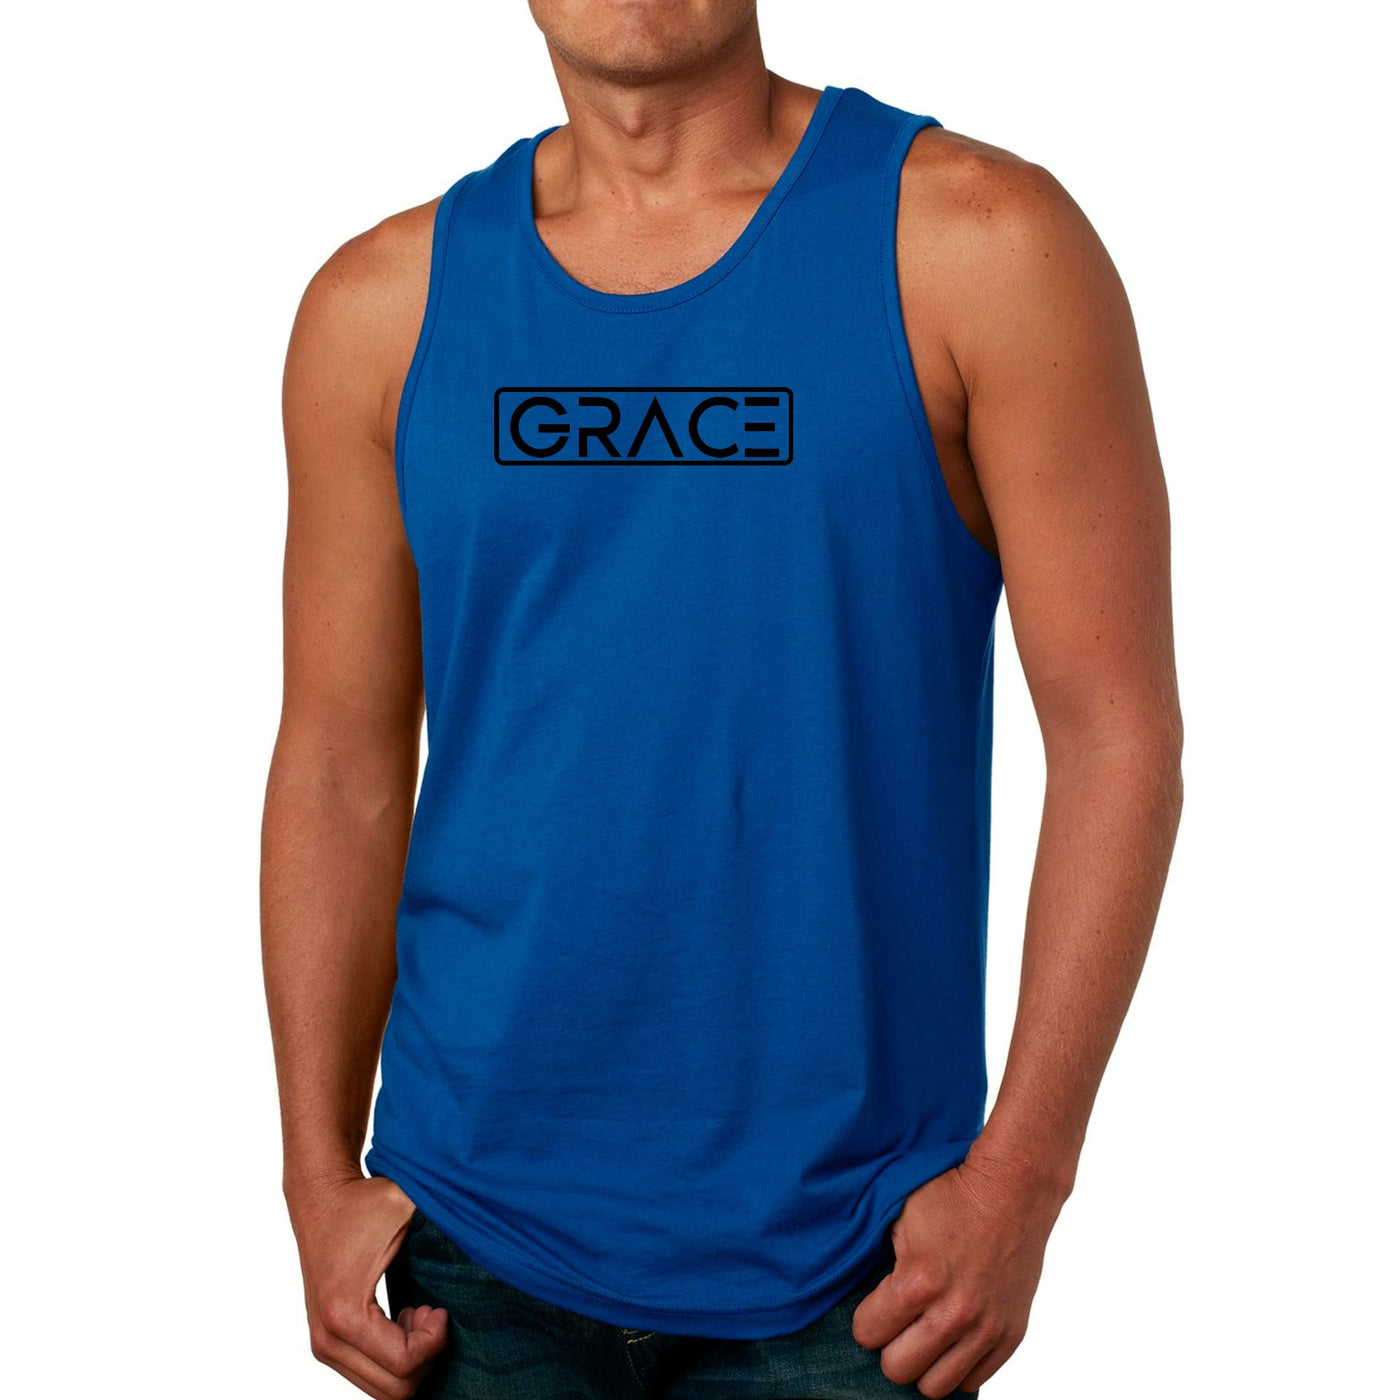 Mens Tank Top Fitness T - shirt Grace Christian Black Illustration - Tops